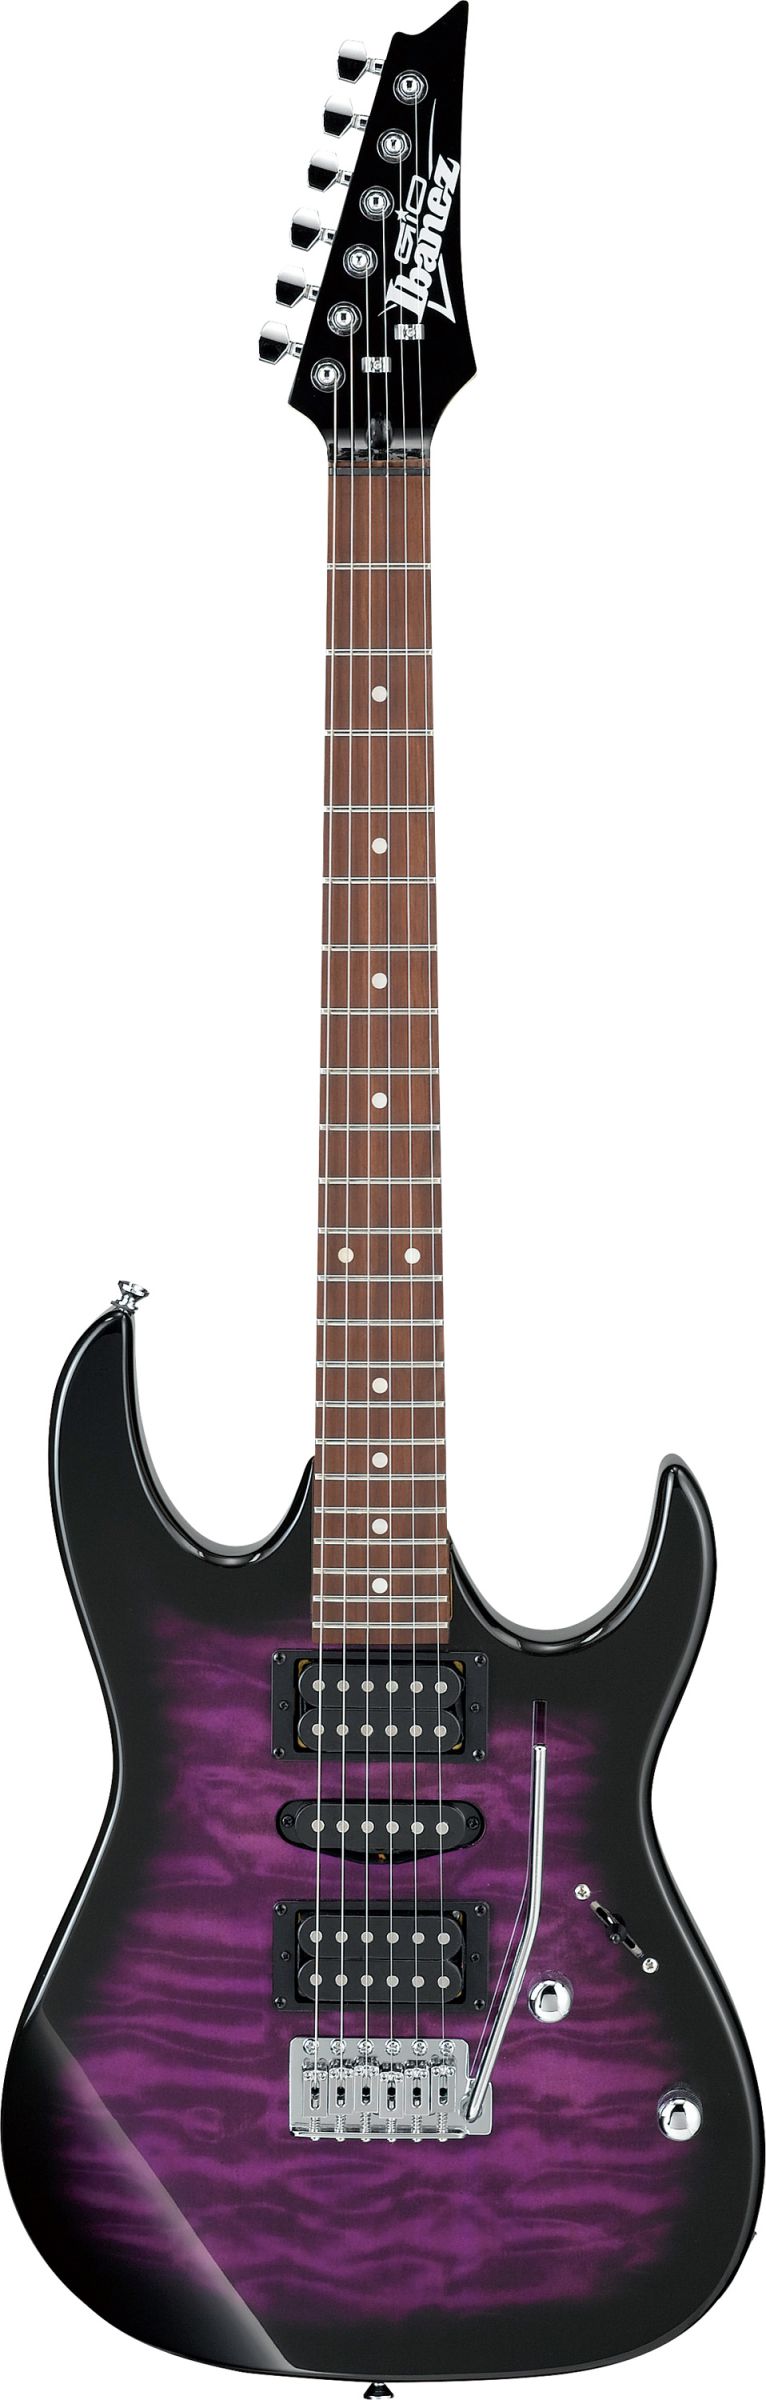 An image of Ibanez GRX70QA Electric Guitar Transparent Violet Sunburst